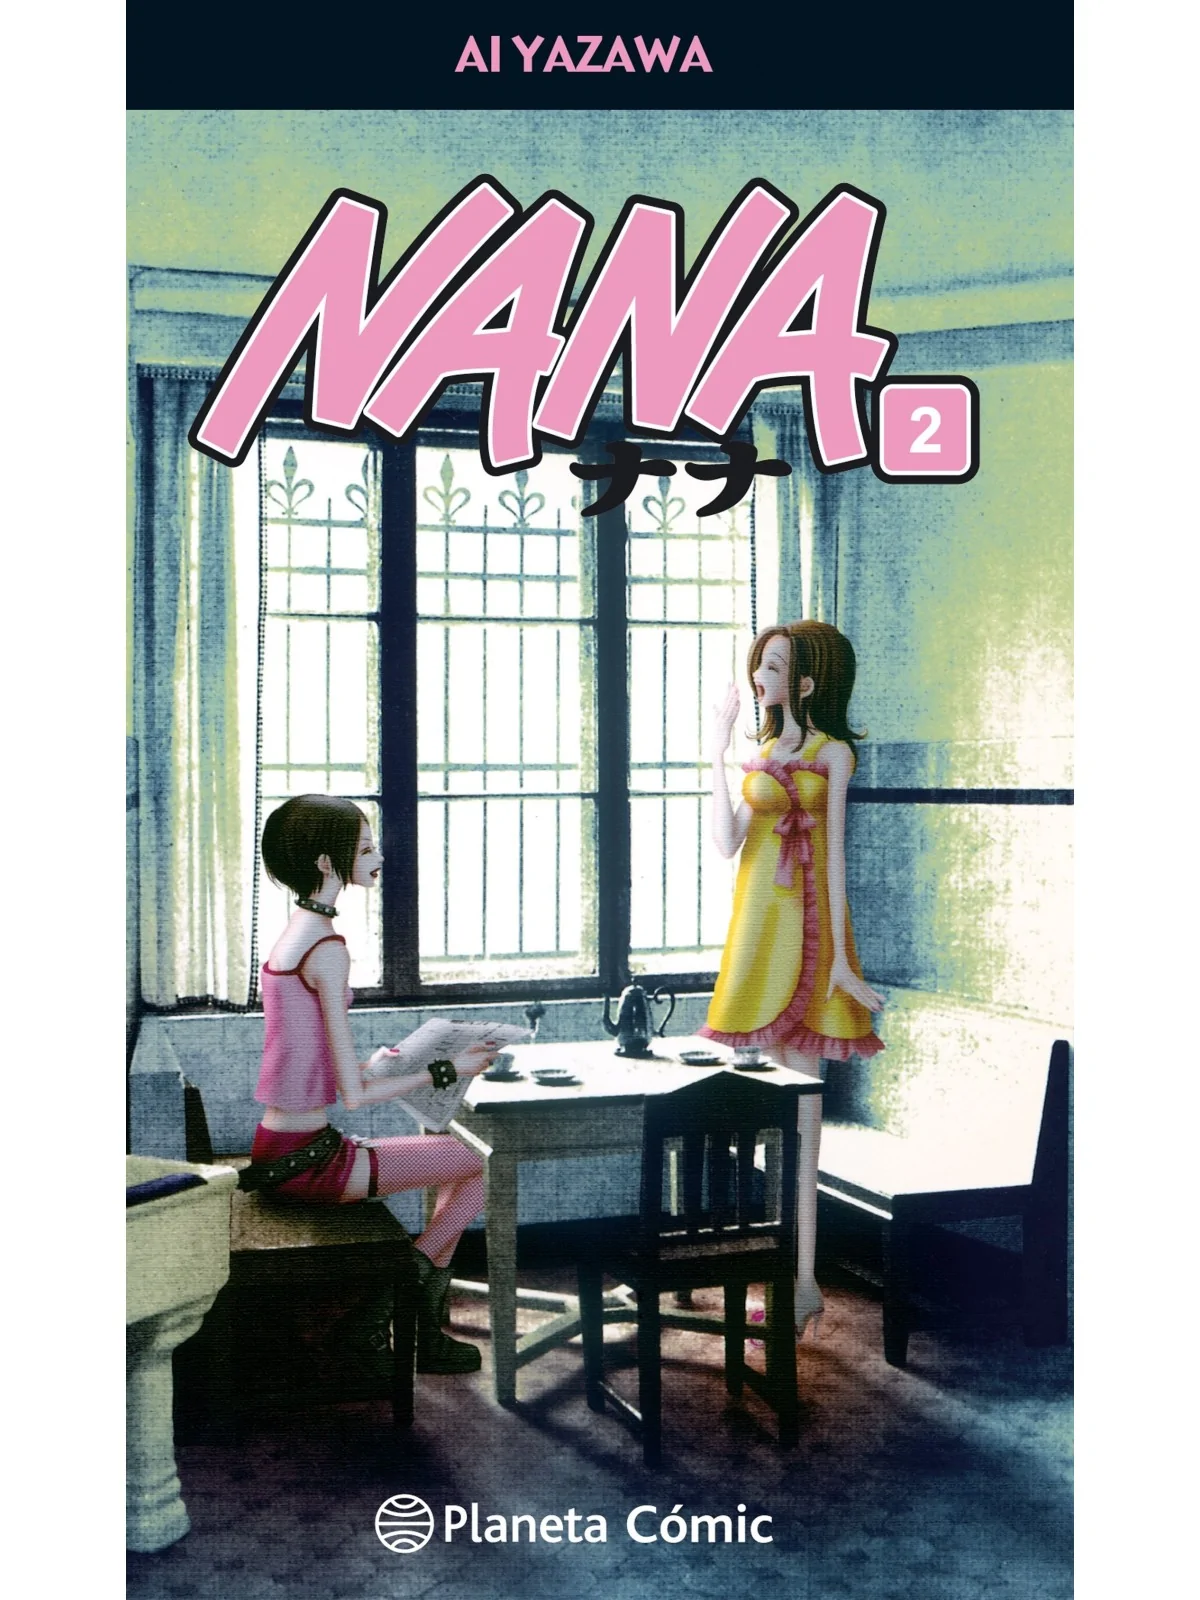 Comprar 2.nana.(Comics manga) barato al mejor precio 8,51 € de Planeta